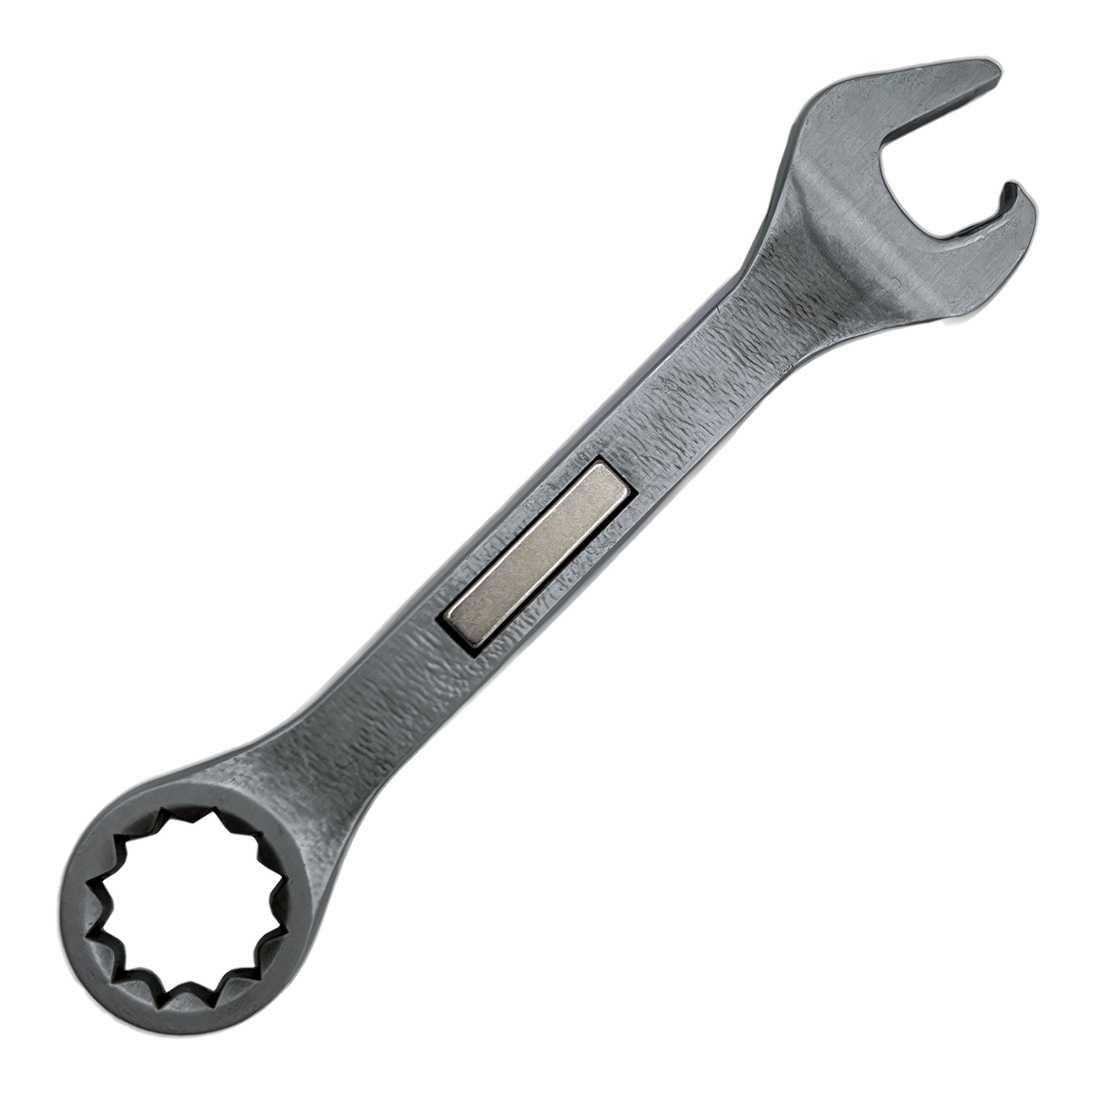 Hot Wheels | Wrench Metal Bottle Opener